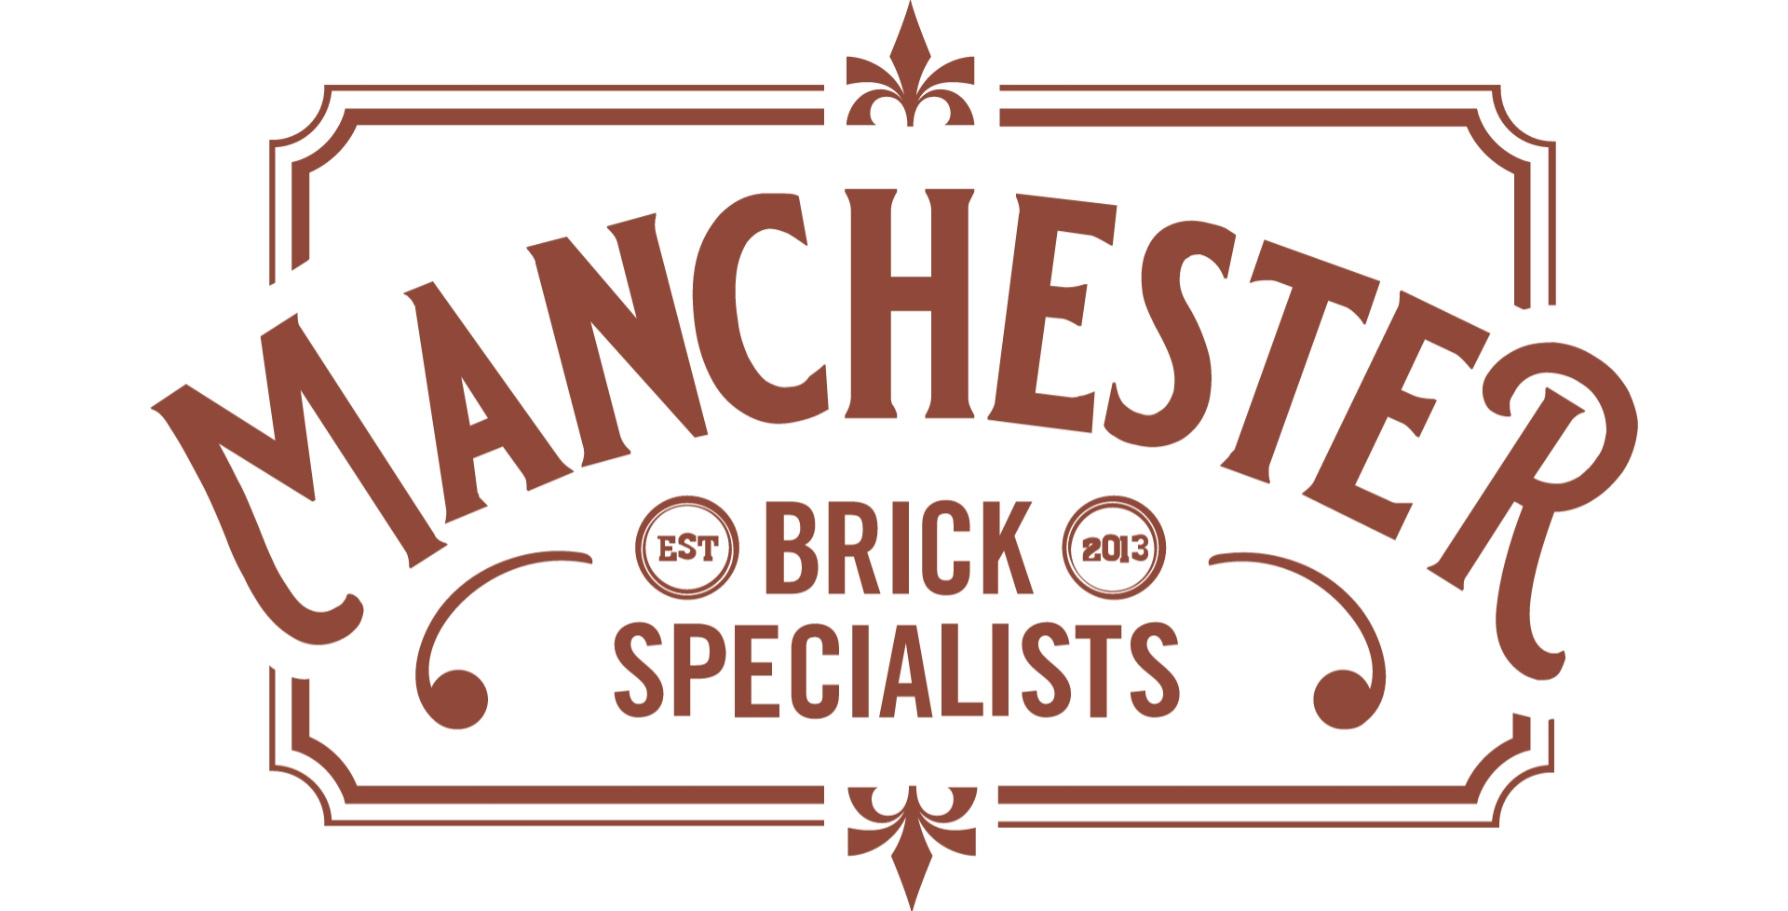 Manchester Brick Specialists Ltd